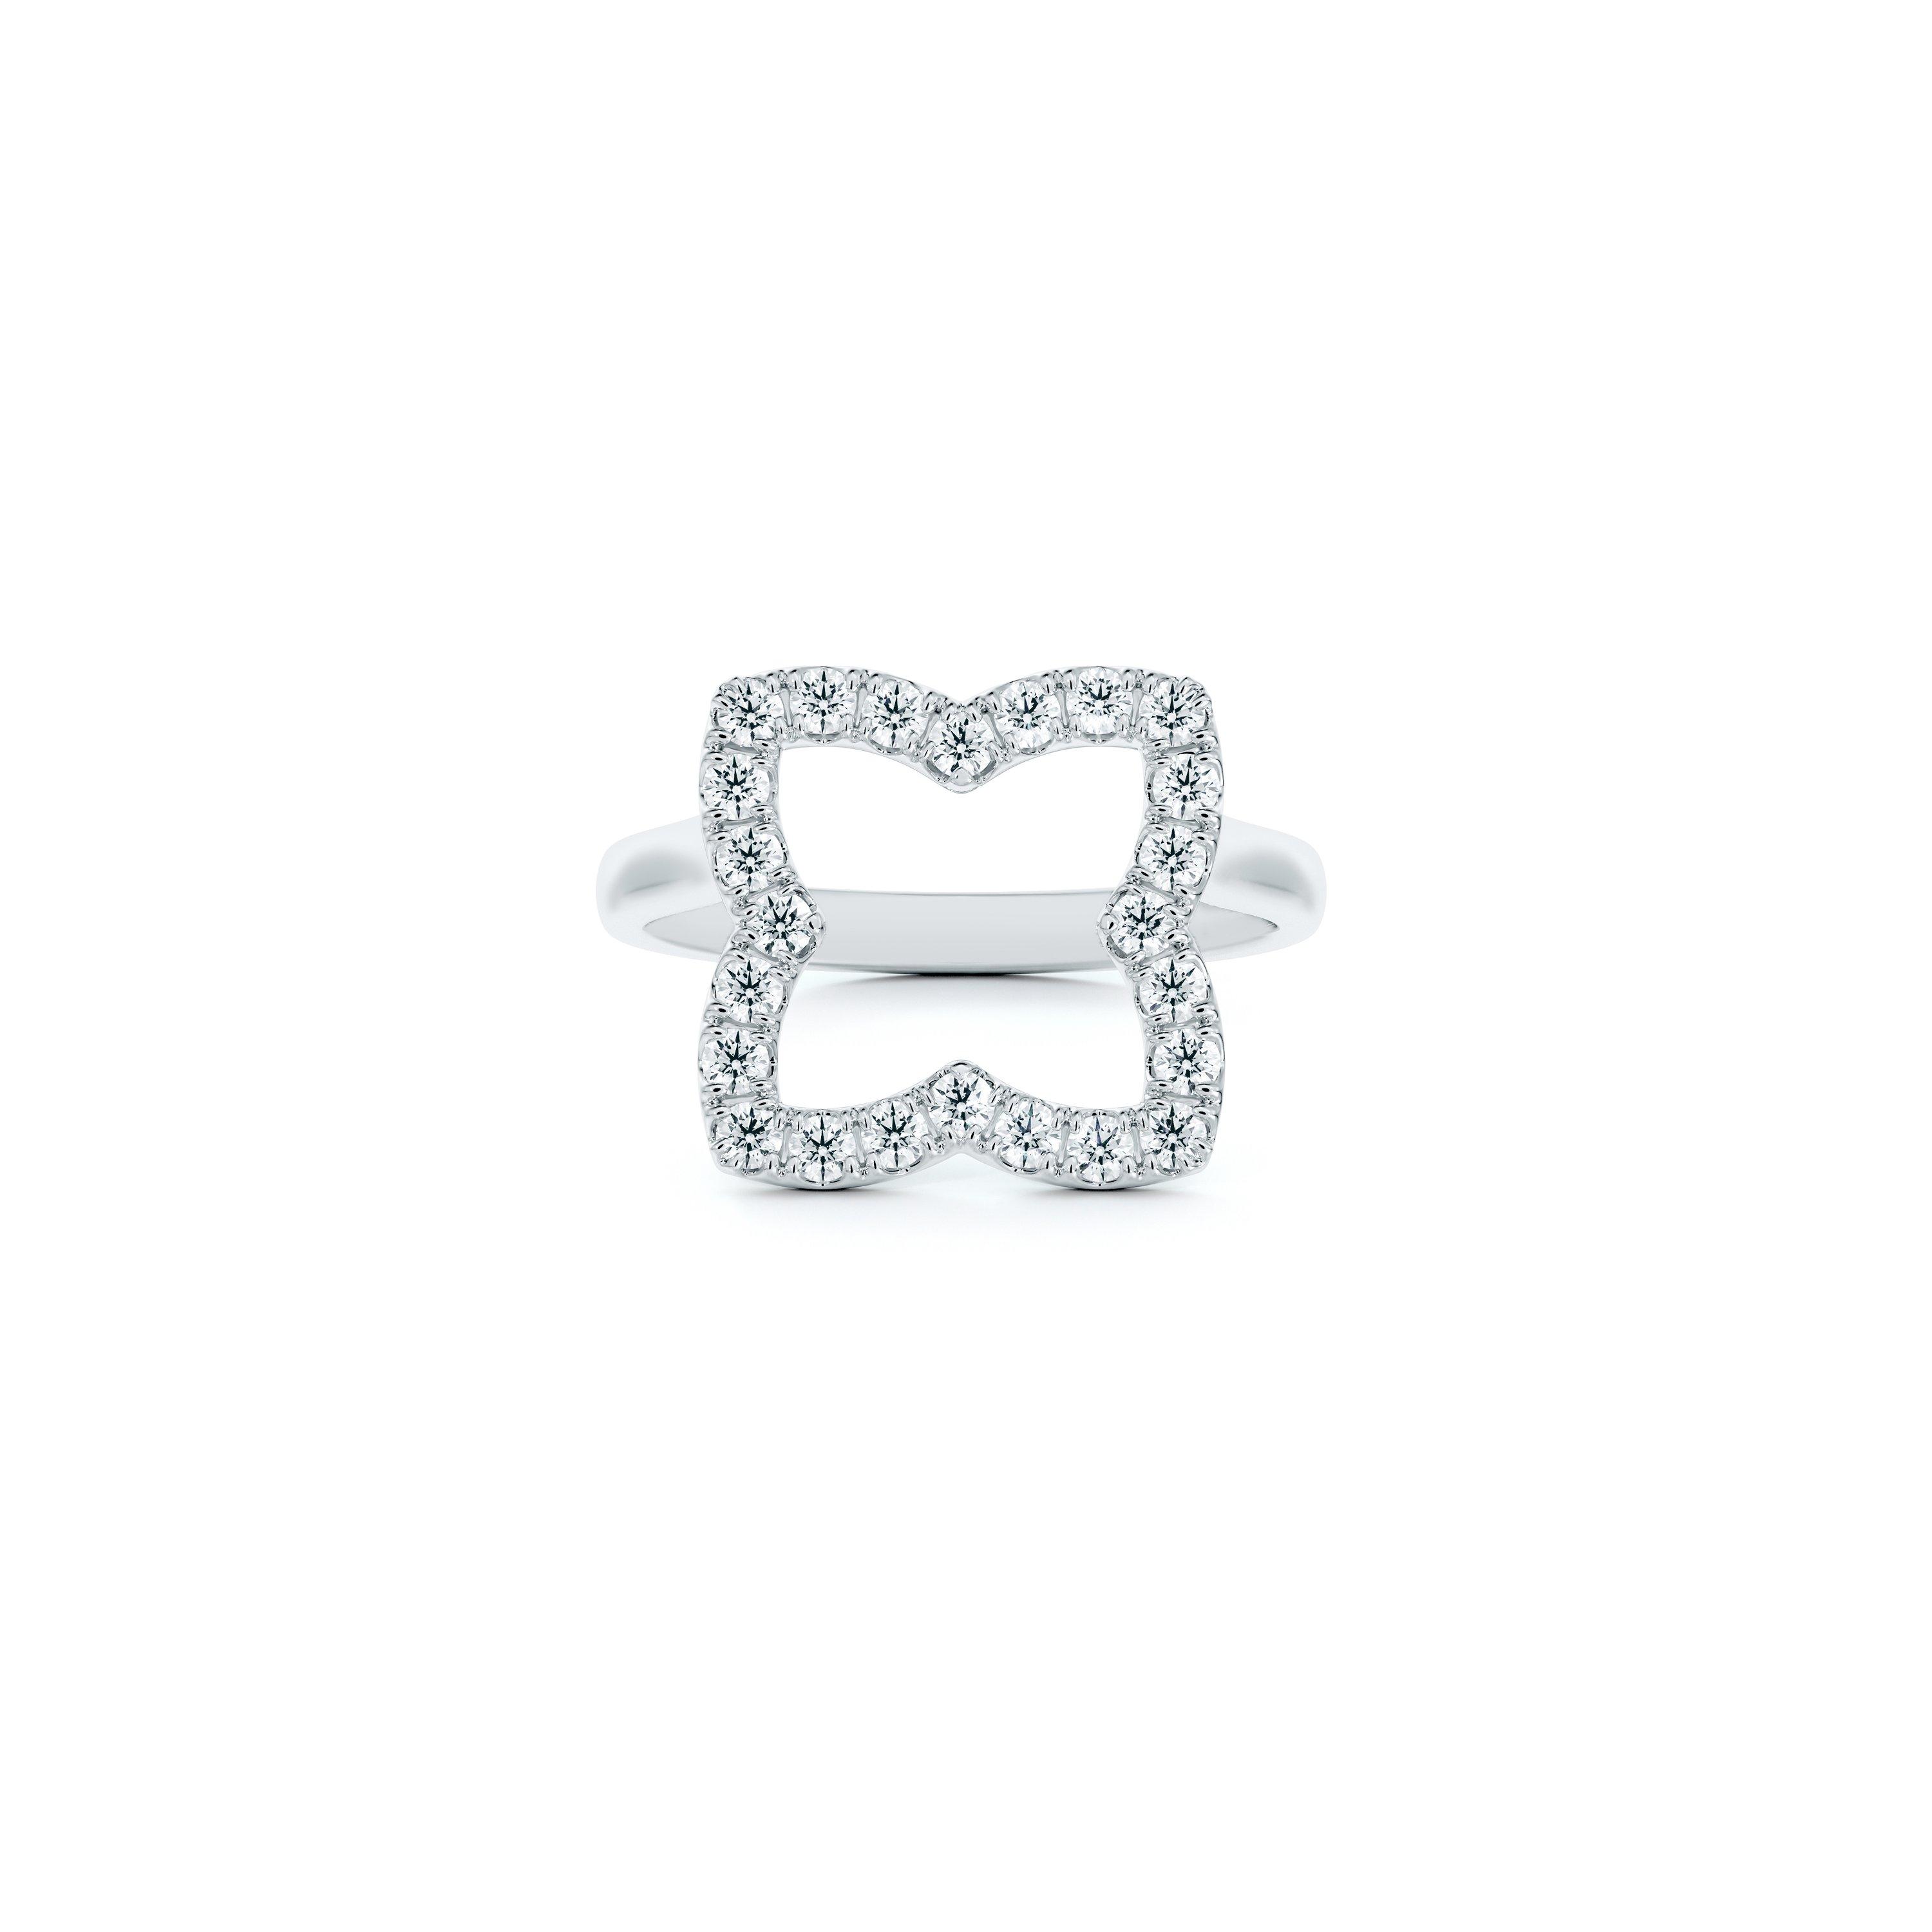 Aura pear-shaped diamond ring